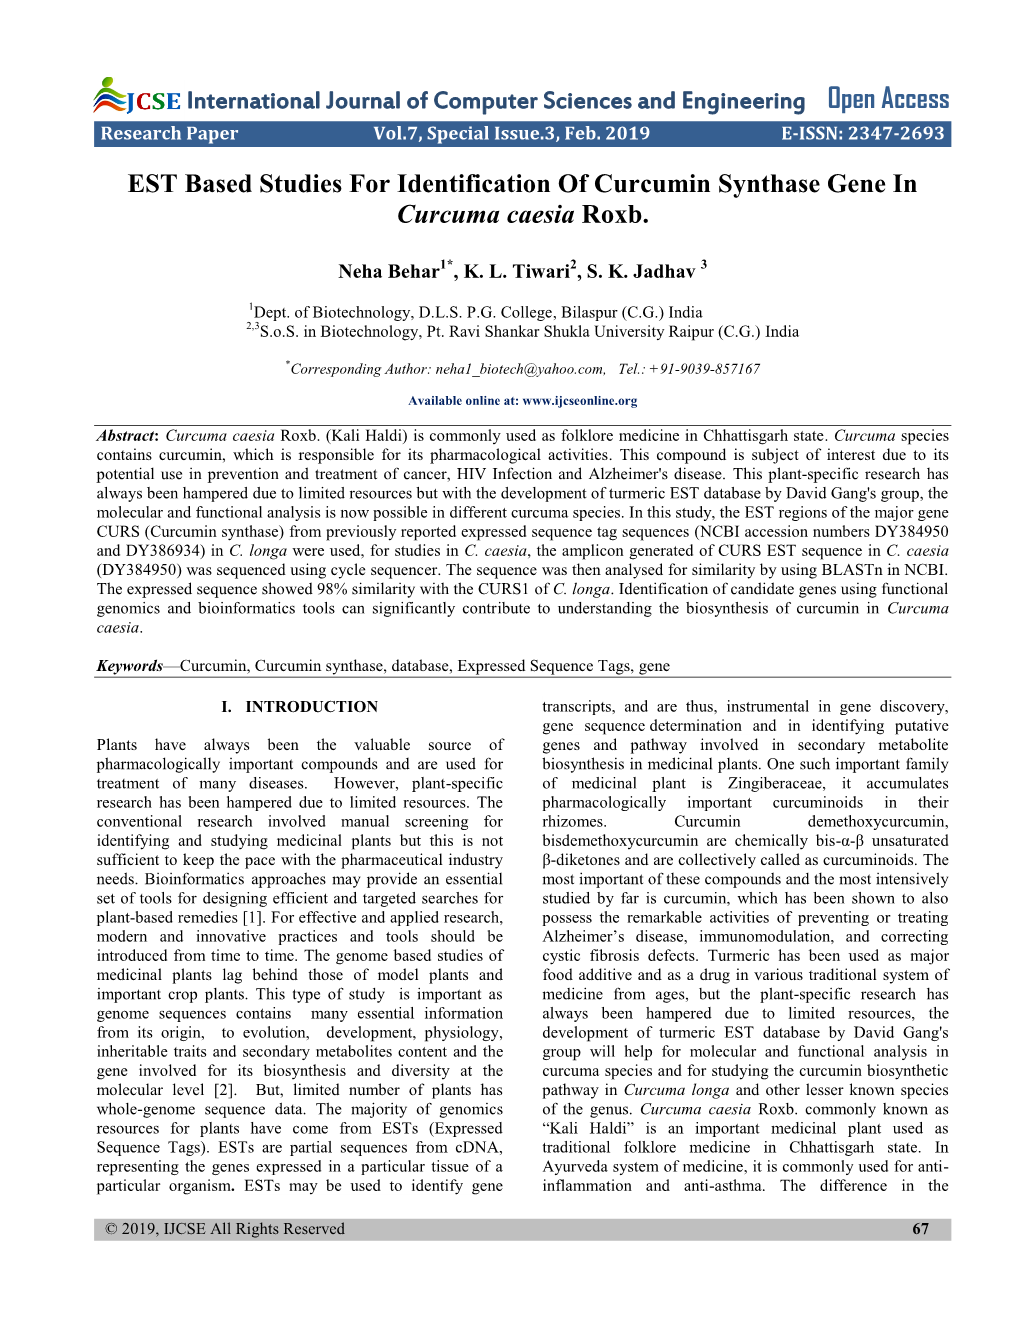 EST Based Studies for Identification of Curcumin Synthase Gene in Curcuma Caesia Roxb